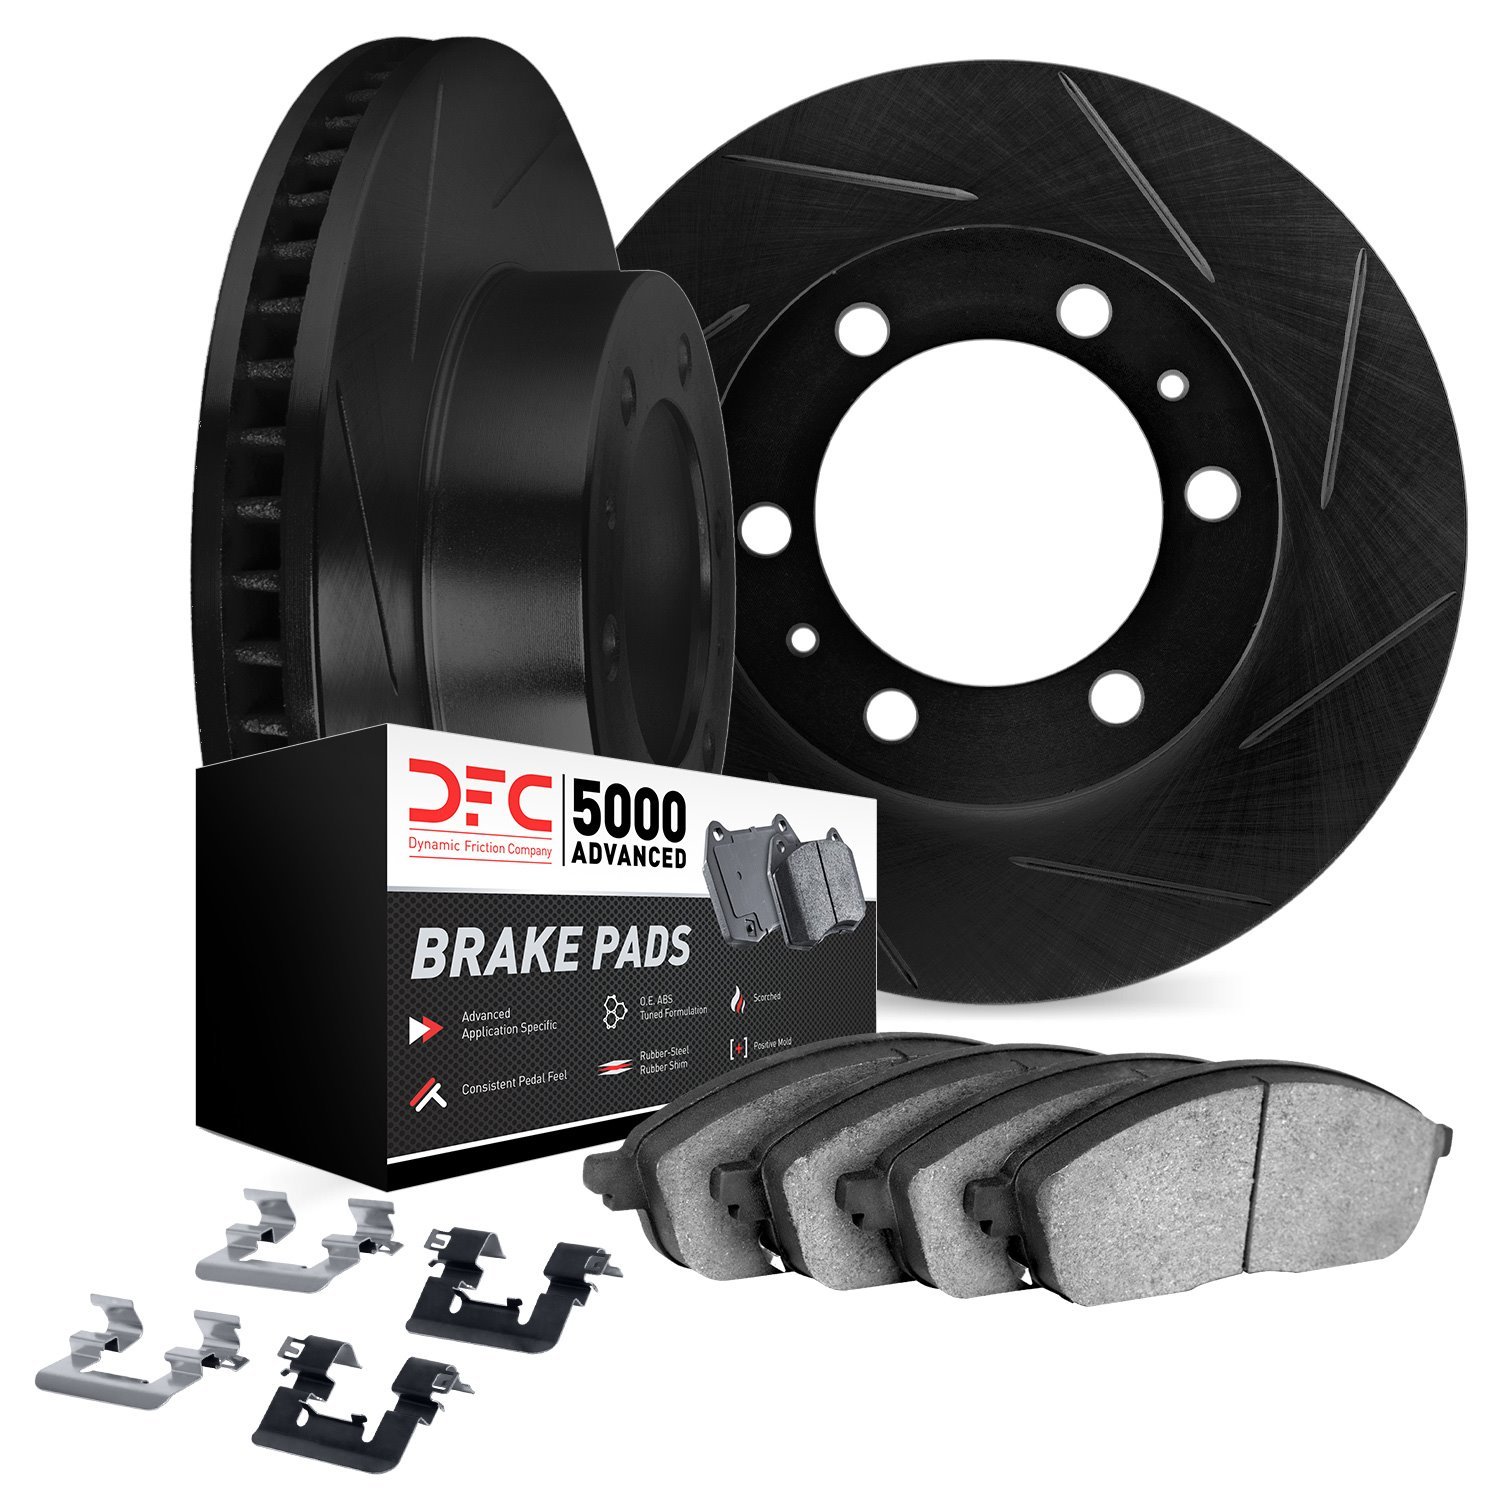 3512-54228 Slotted Brake Rotors w/5000 Advanced Brake Pads Kit & Hardware [Black], 2015-2017 Ford/Lincoln/Mercury/Mazda, Positio